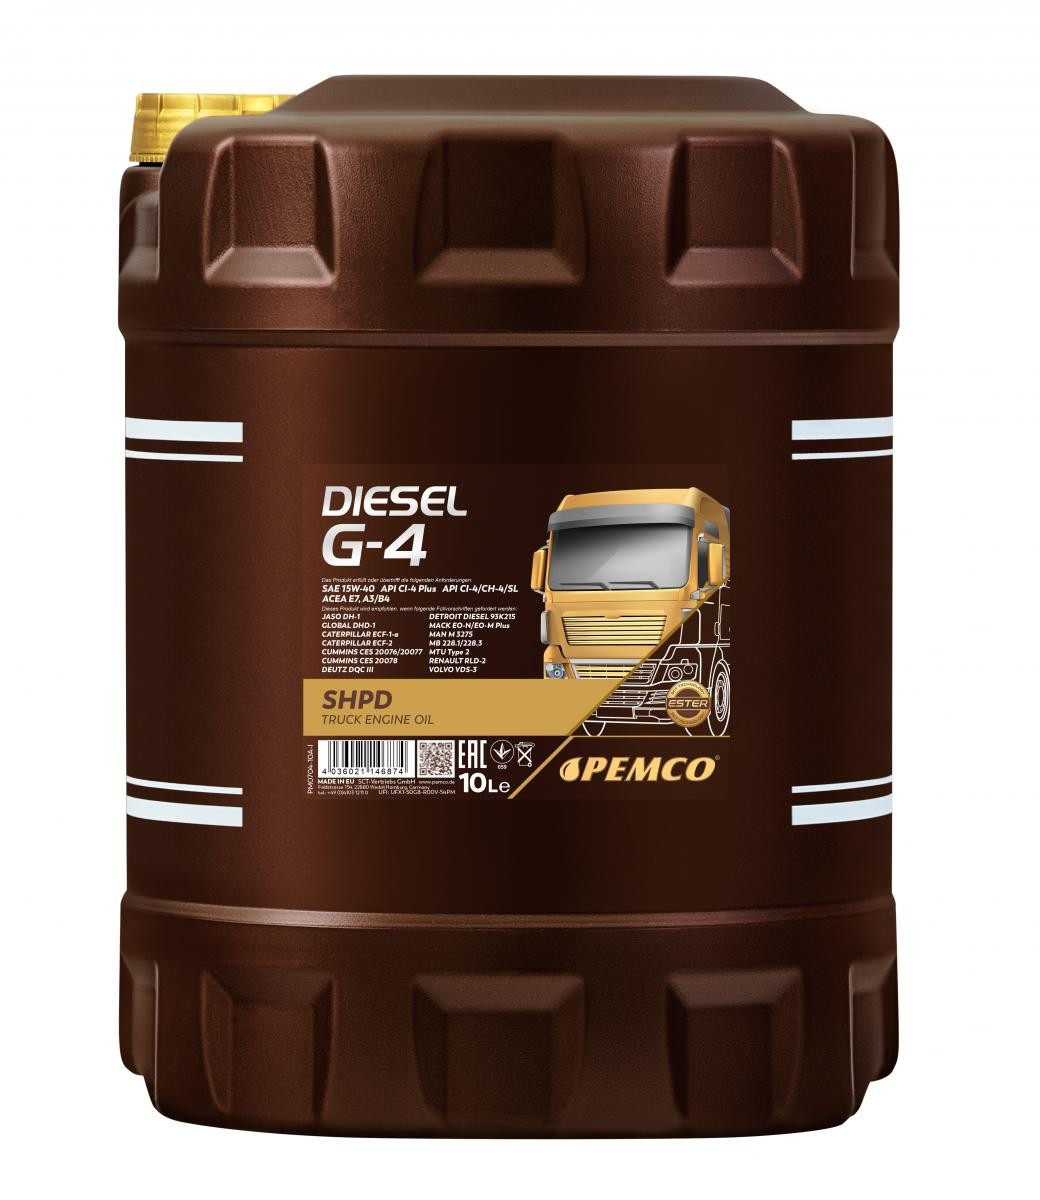 Comprar Aceite de motor PEMCO PM0704-10 Truck SHPD, DIESEL G-4 SHPD 15W-40, 10L, Aceite mineral